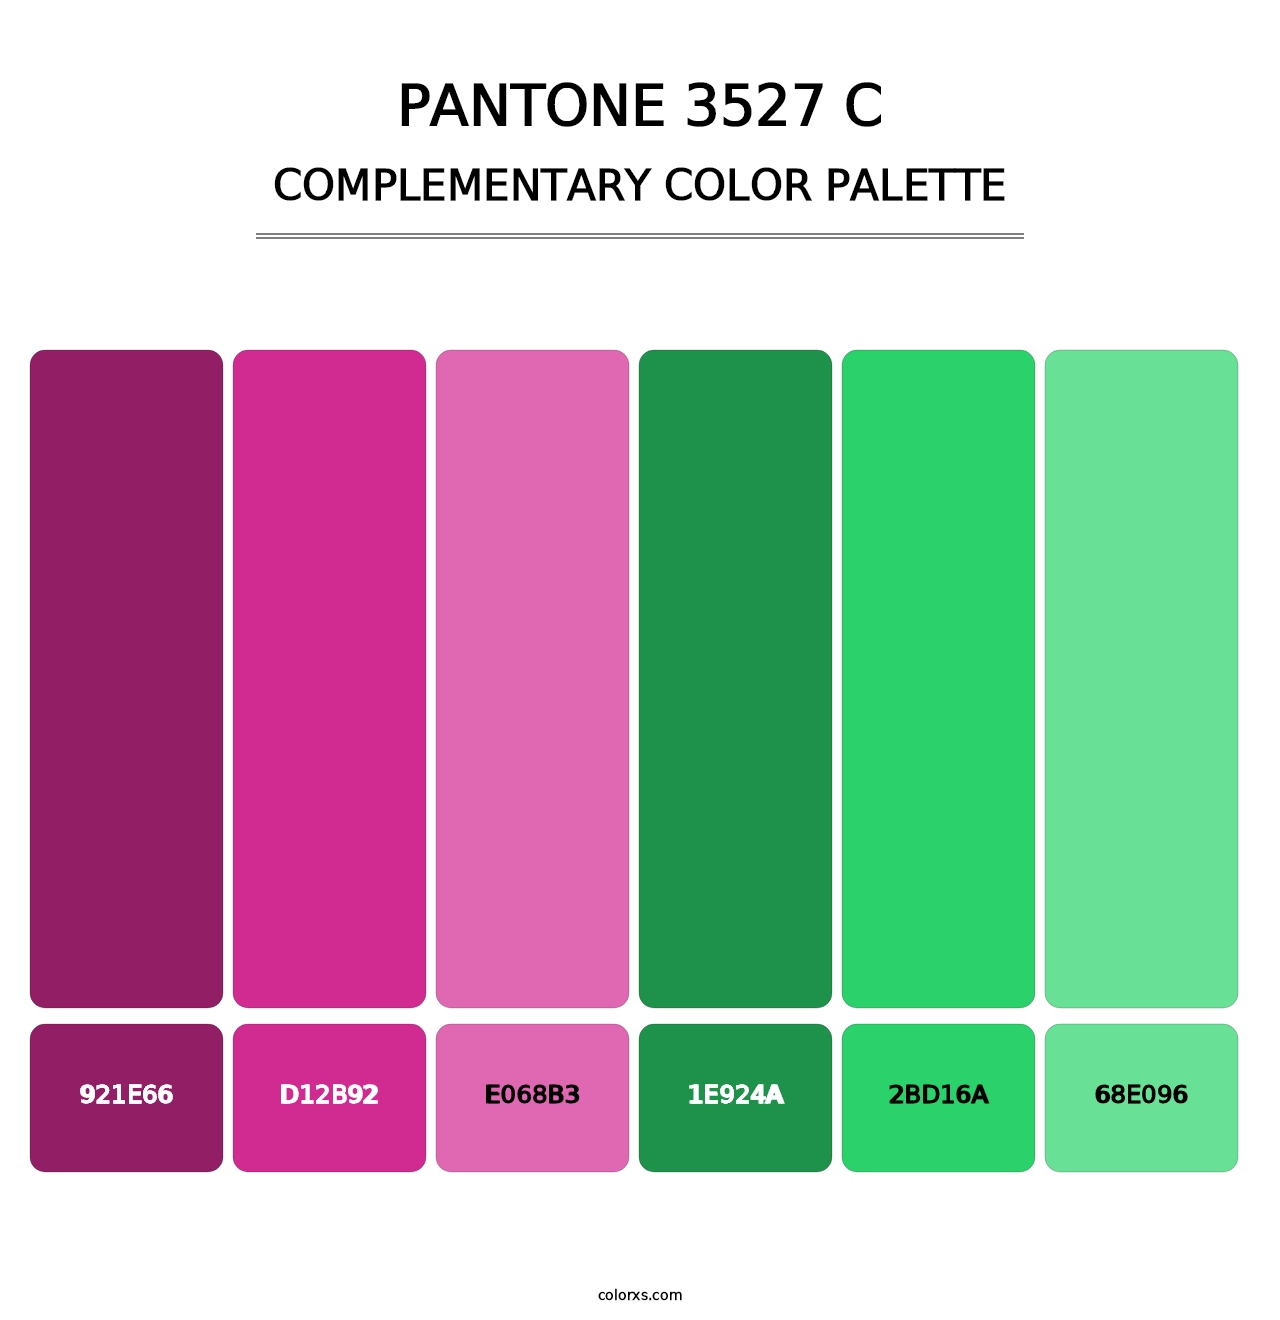 PANTONE 3527 C - Complementary Color Palette